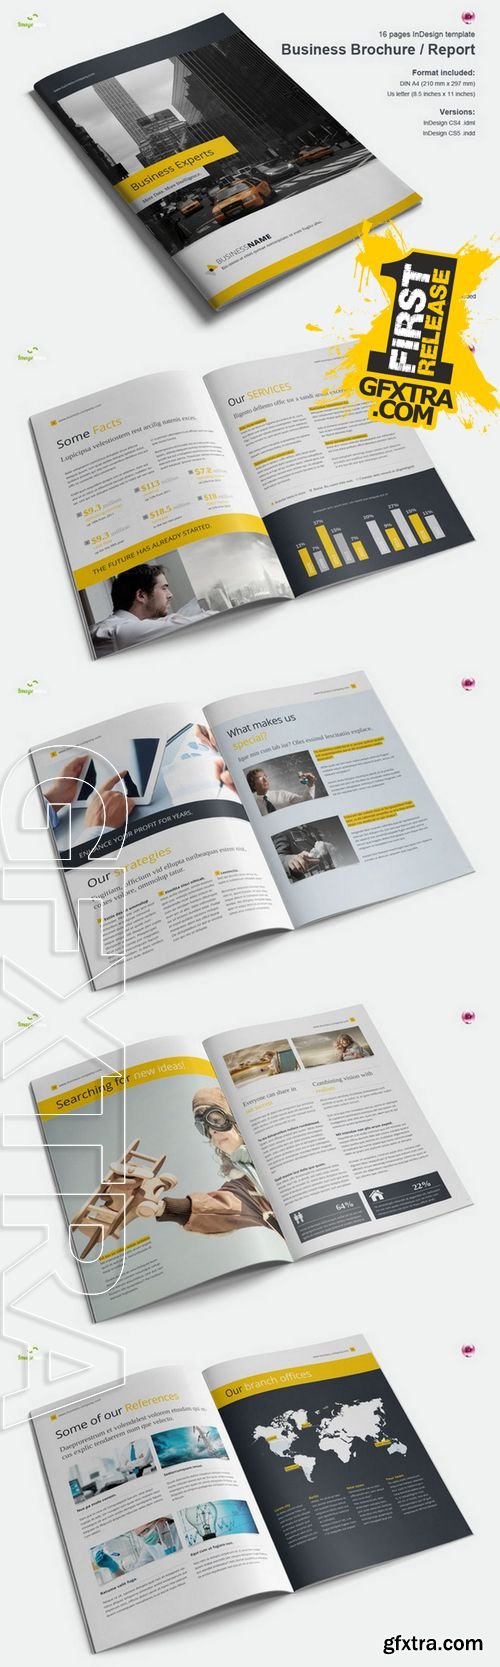 Business Brochure / Report Vol. 2 - CM 211945